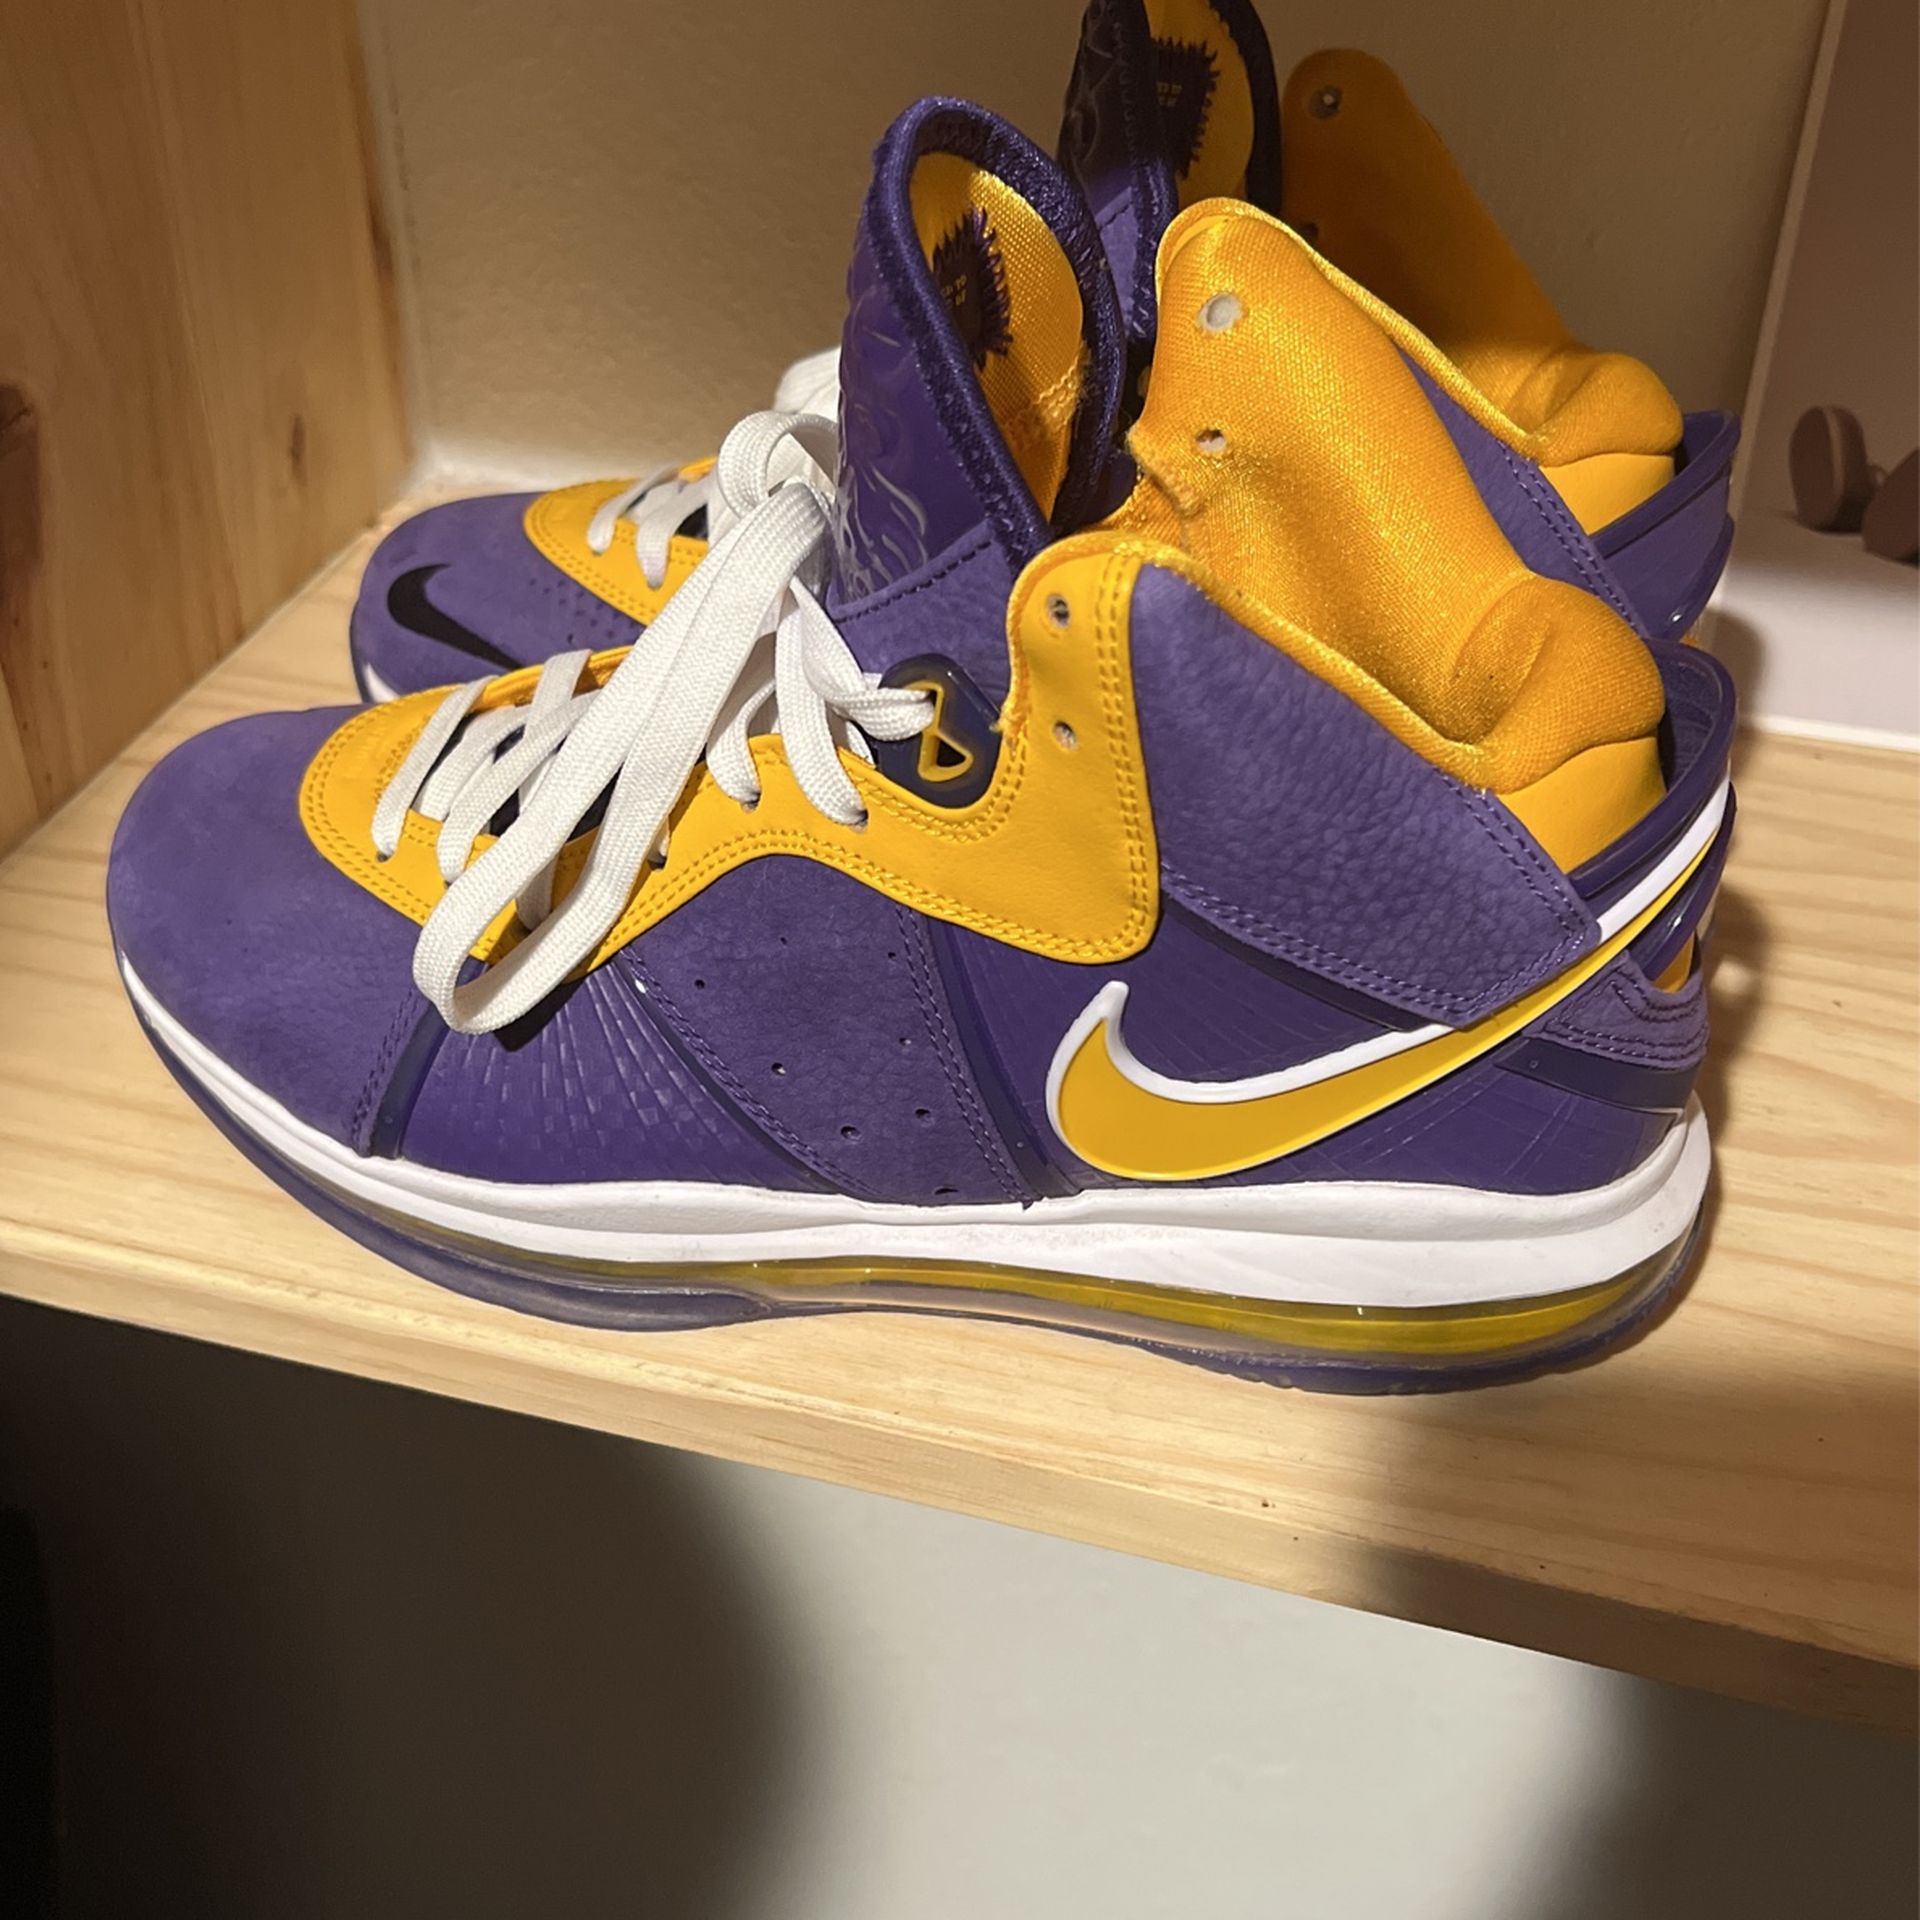 Lebron 8 Lakers Size 9